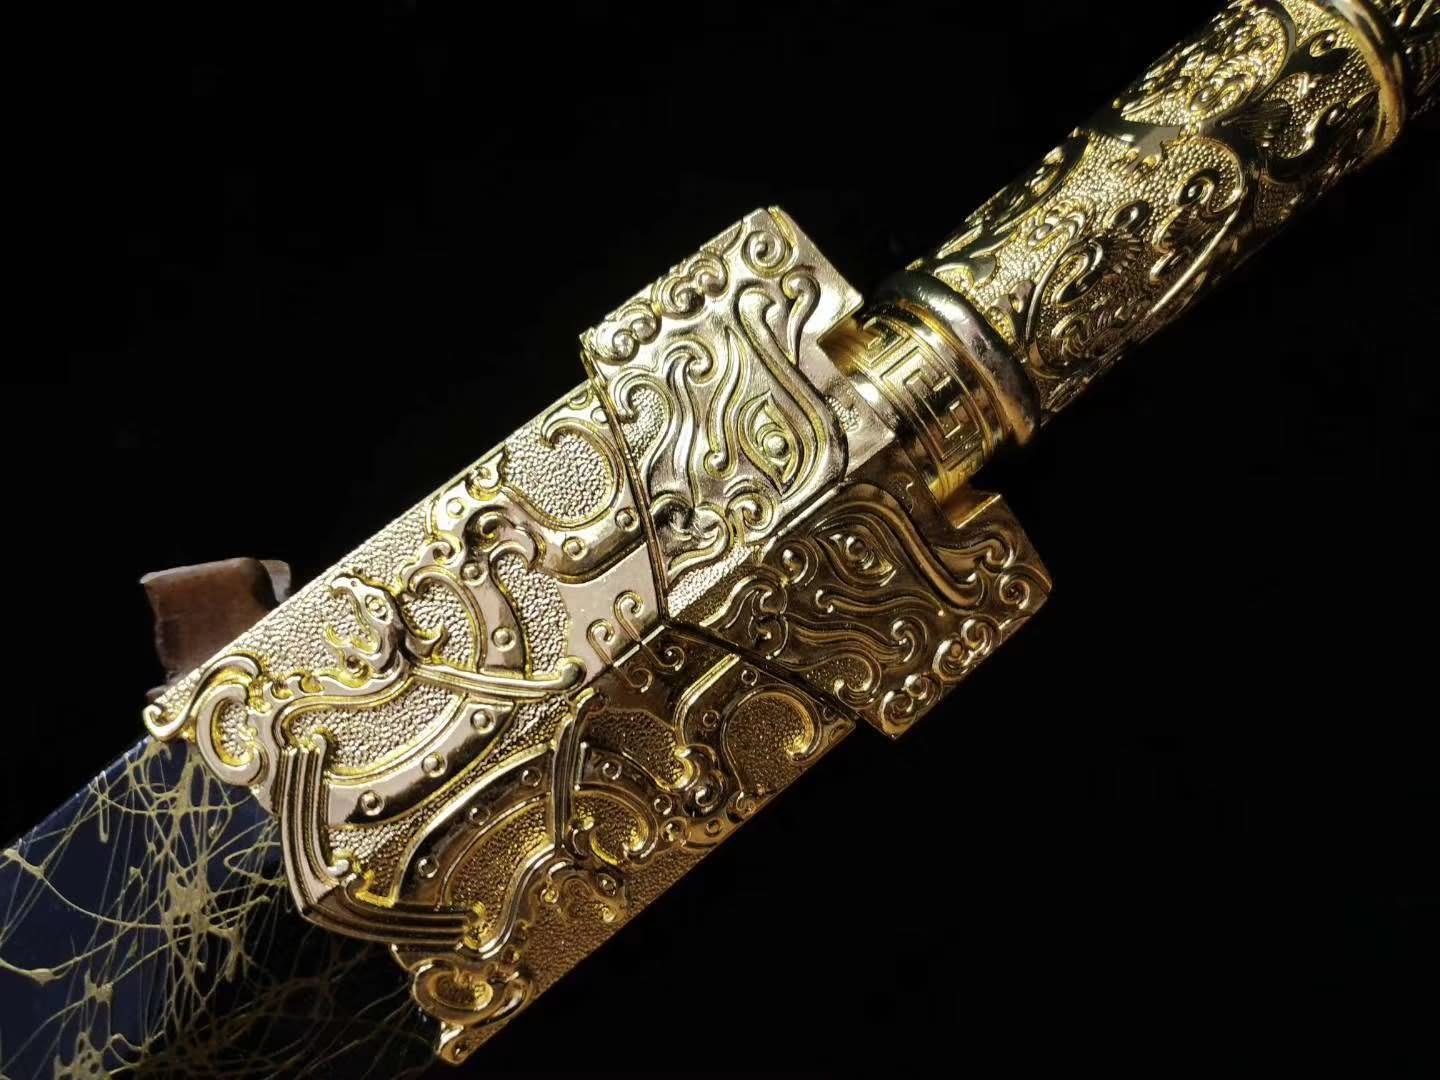 Han jian sword,Medium carbon steel etch blade,Alloy fittings-Kung fu - Chinese sword shop